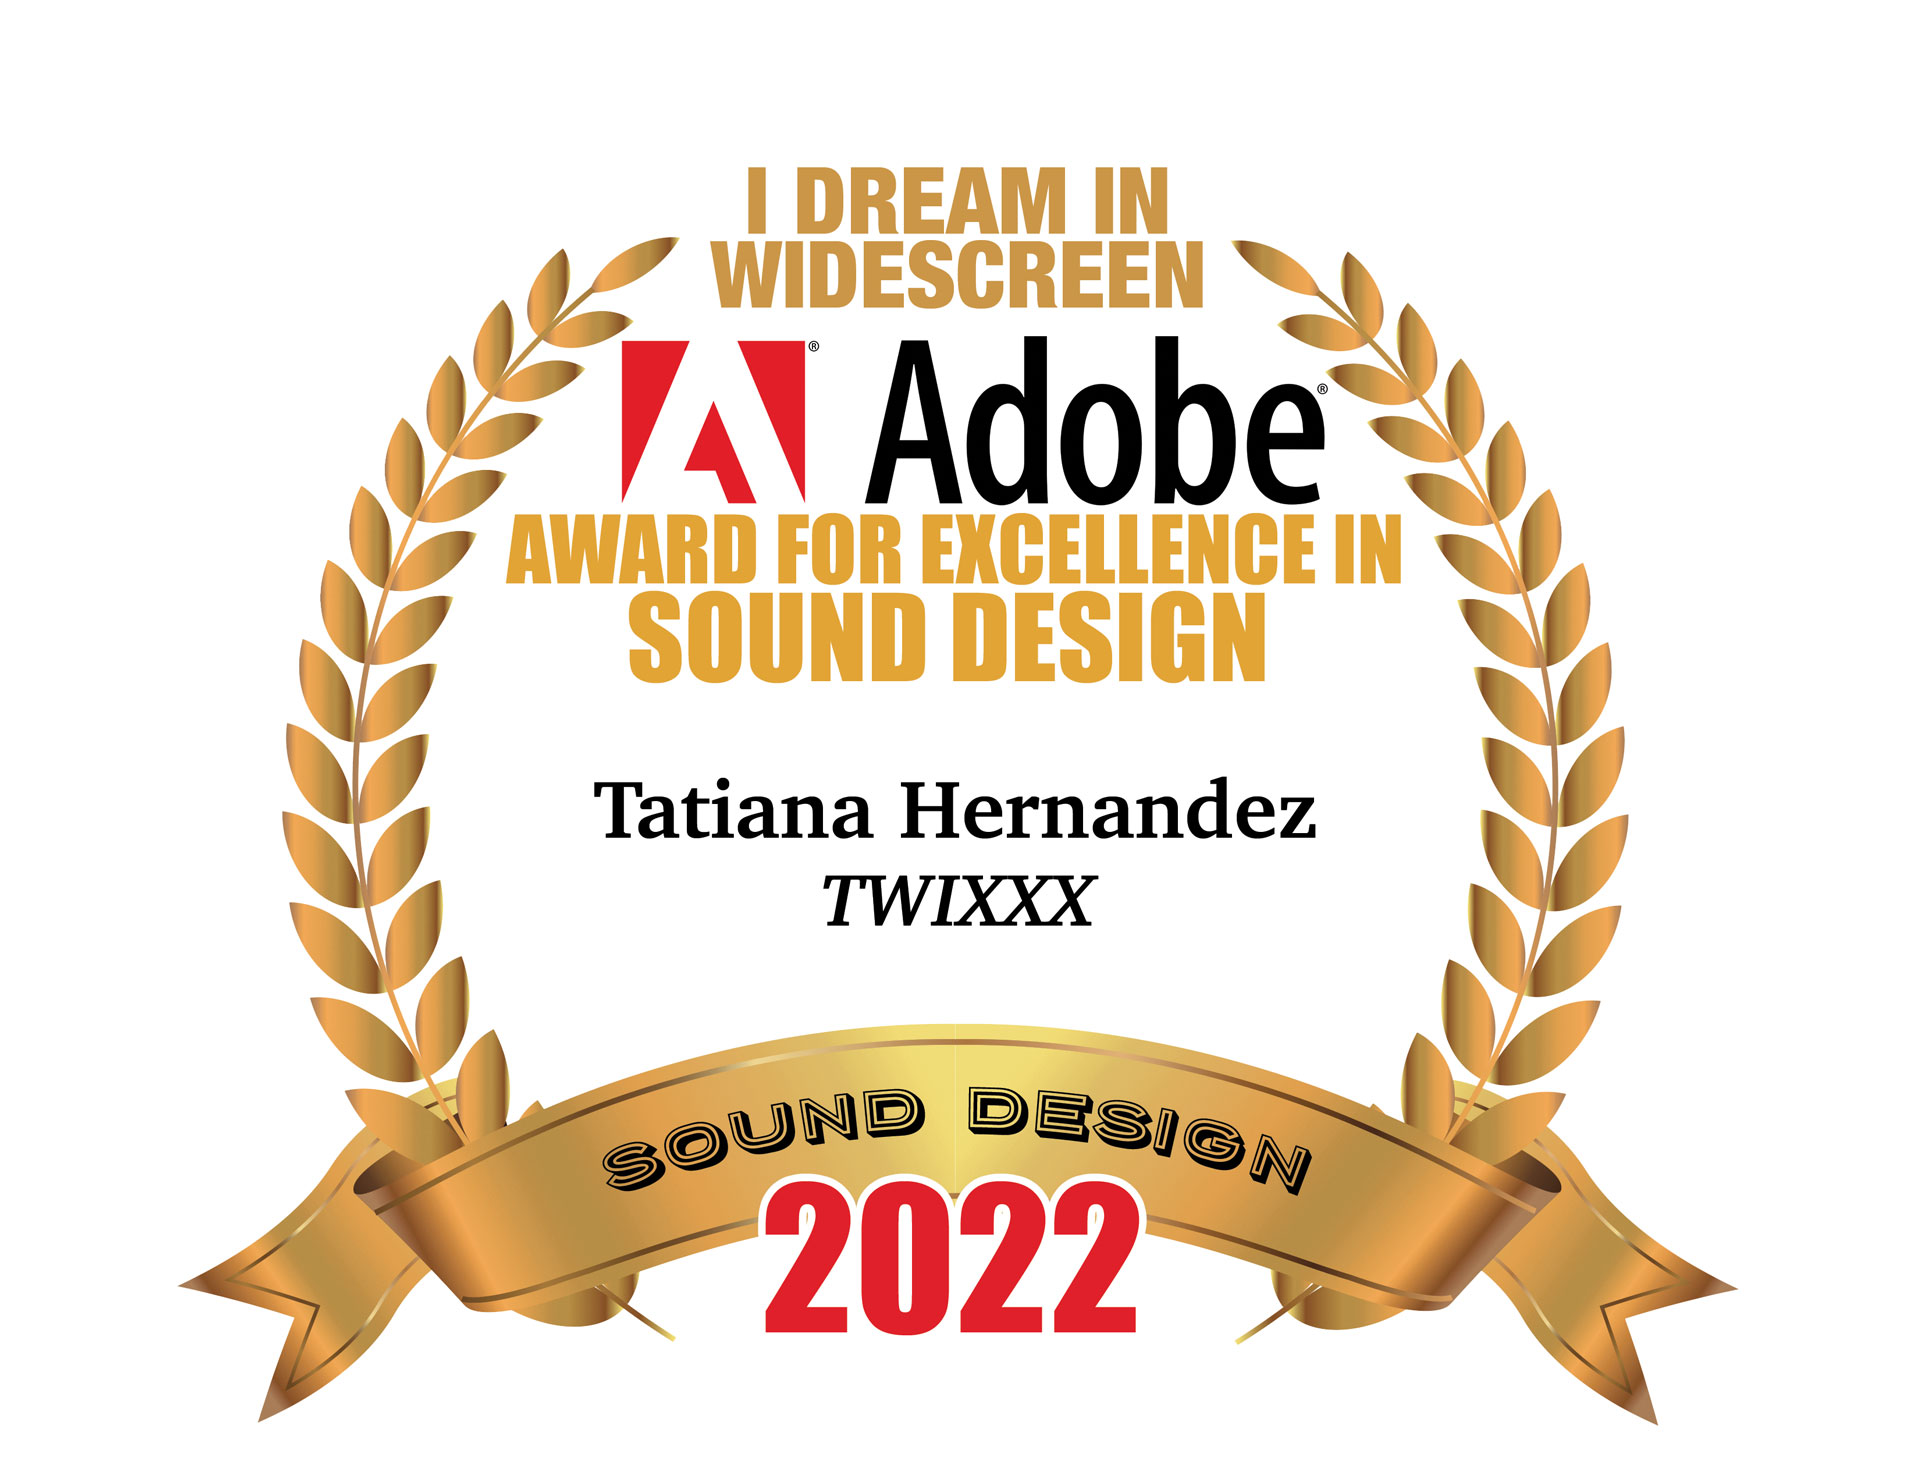 Adobe Award for Excellence in Sound Design